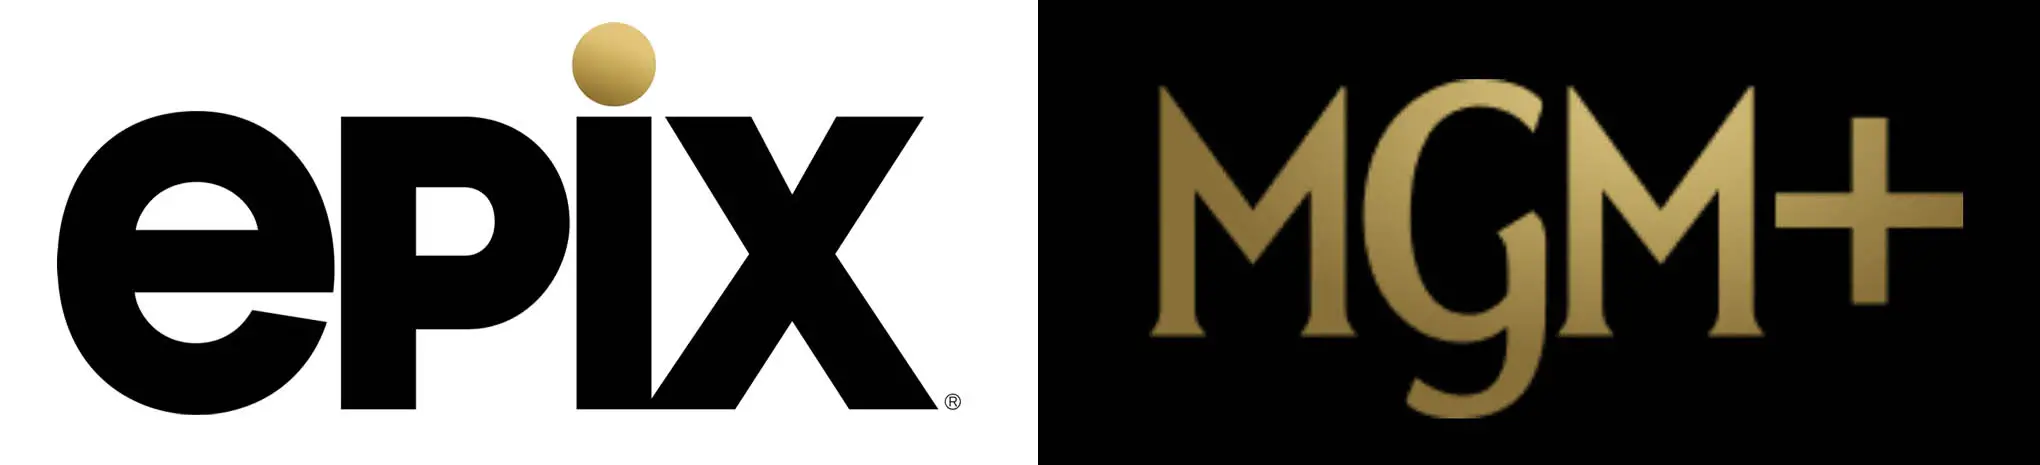 epix-is-now-mgm-plus-logos